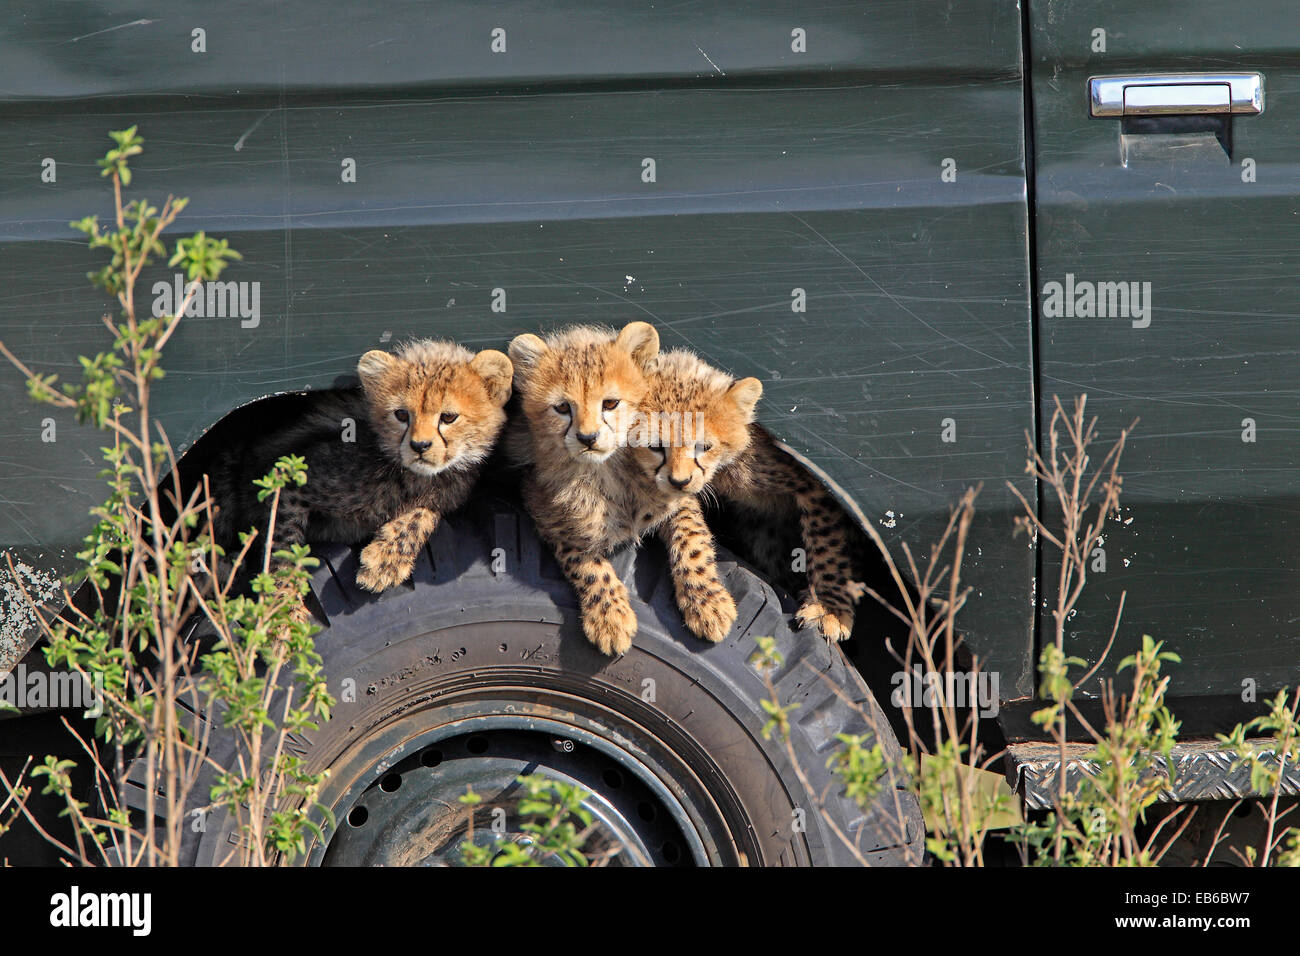 Three young Cheetah cubs on the wheel of a safari vehicle Stock Photo